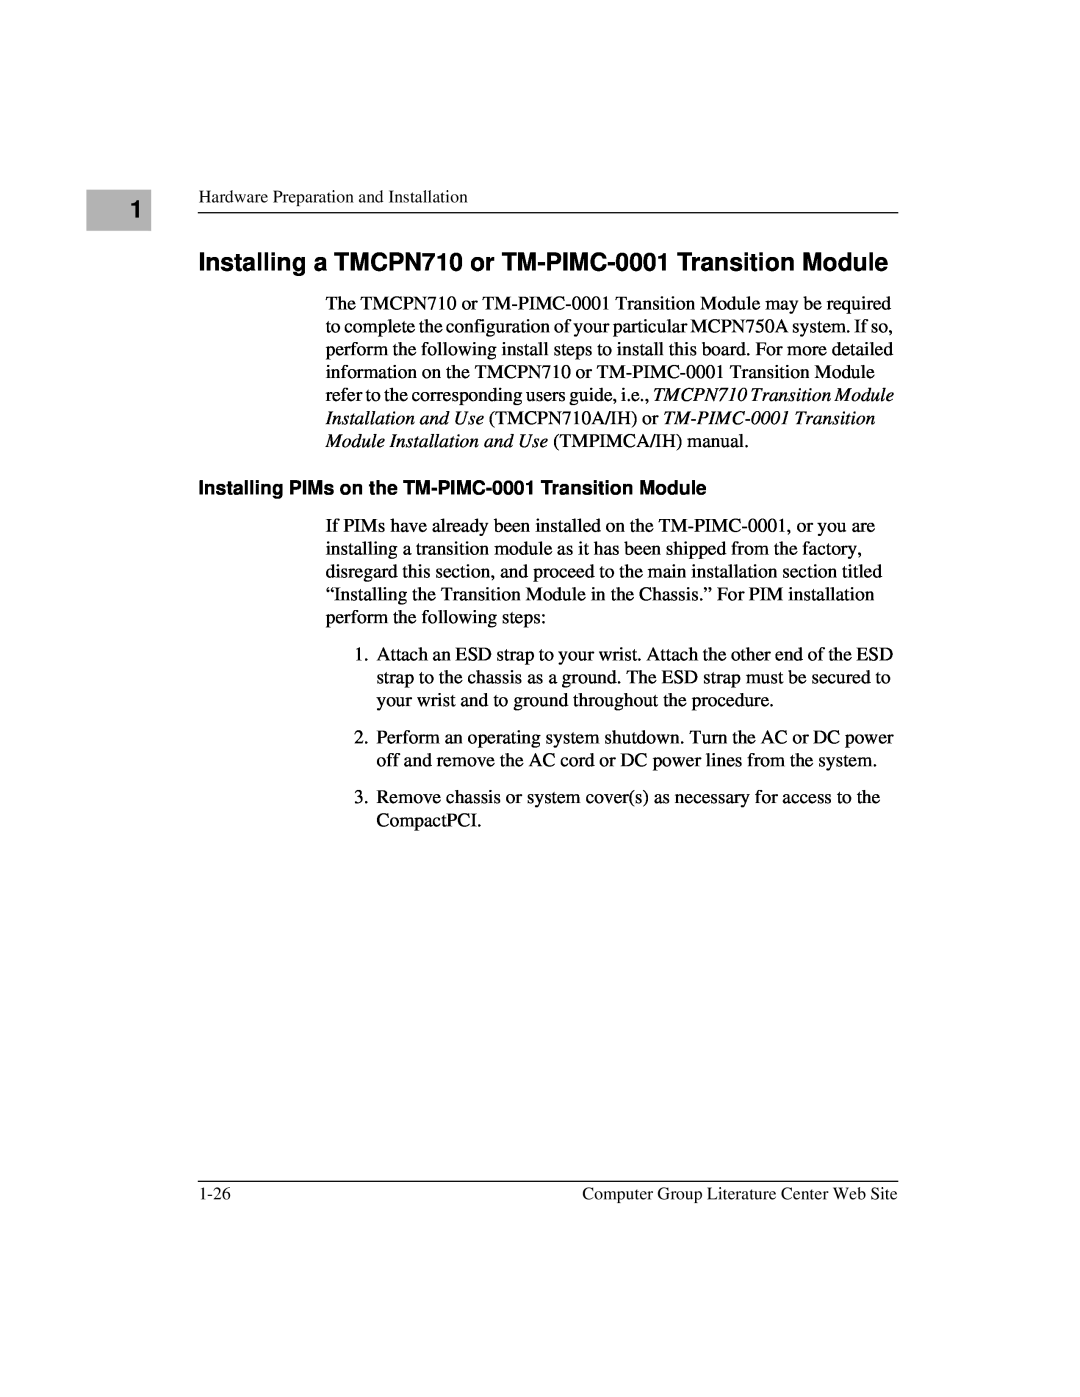 Motorola MCPN750A, IH5 manual Installing a TMCPN710 or TM-PIMC-0001 Transition Module 